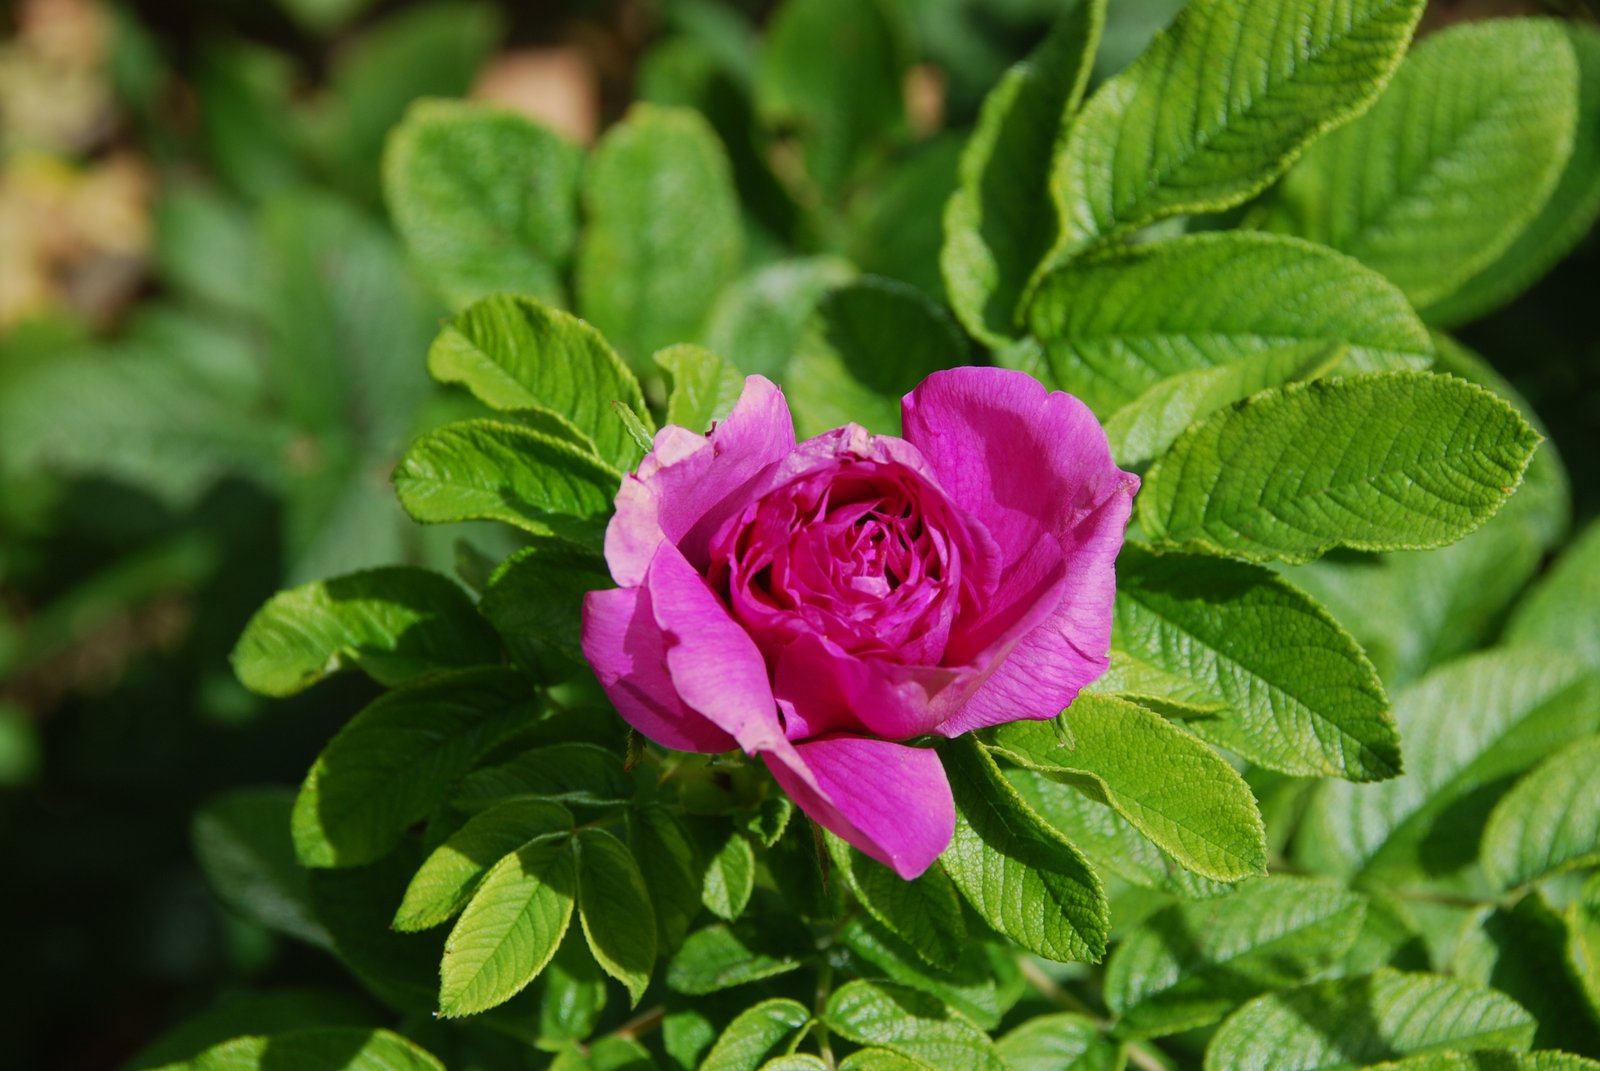 Very pink flower